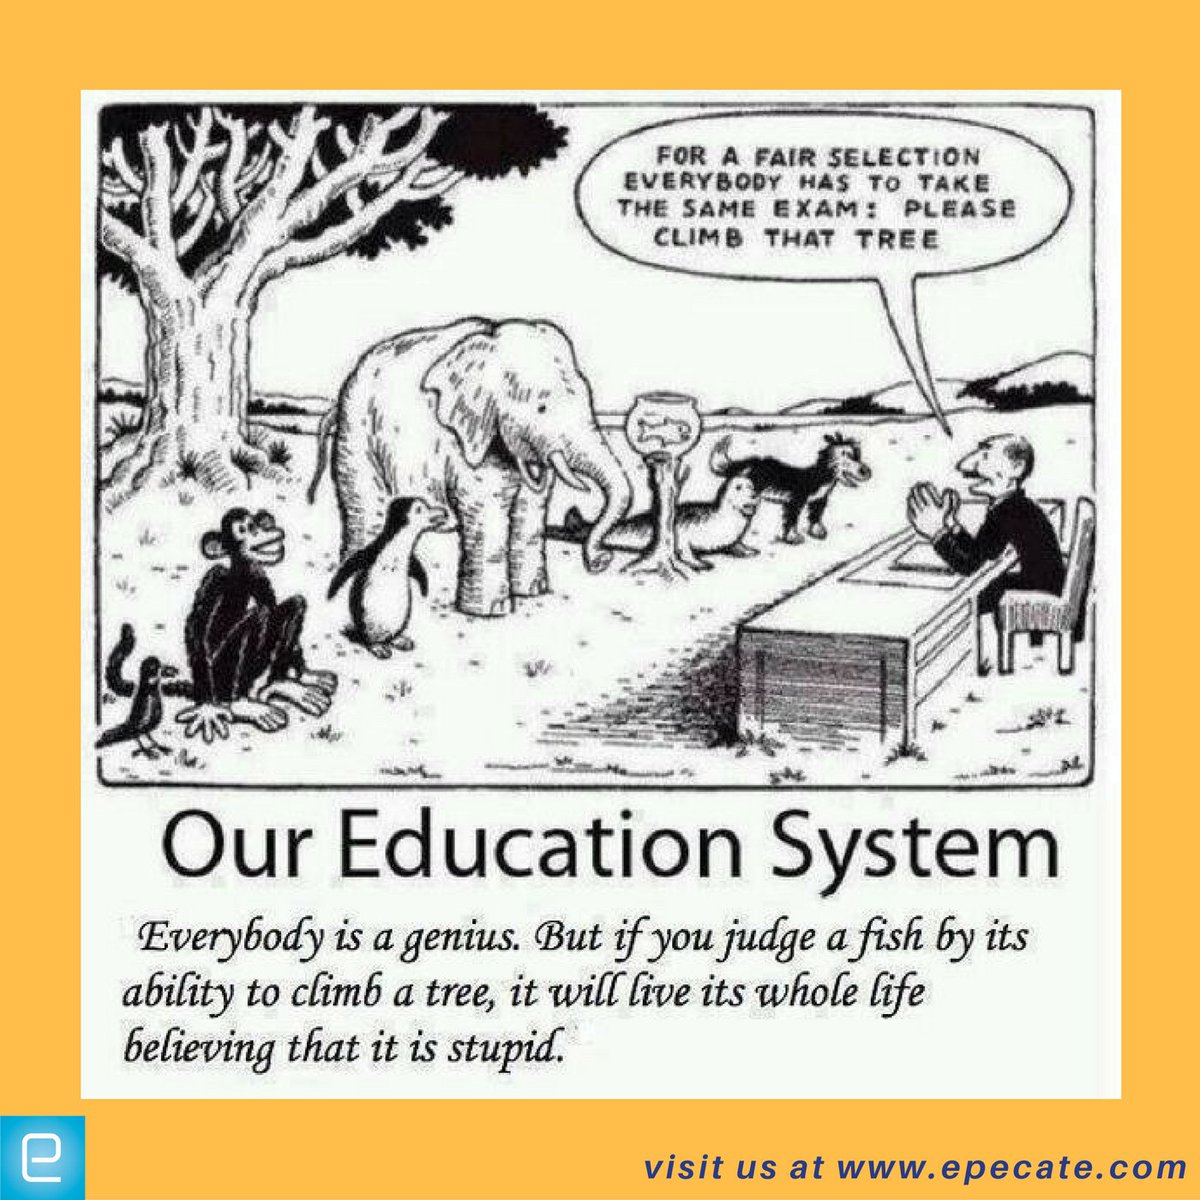 So true isn't it?
#epecate #learningsystem #examinationsystem